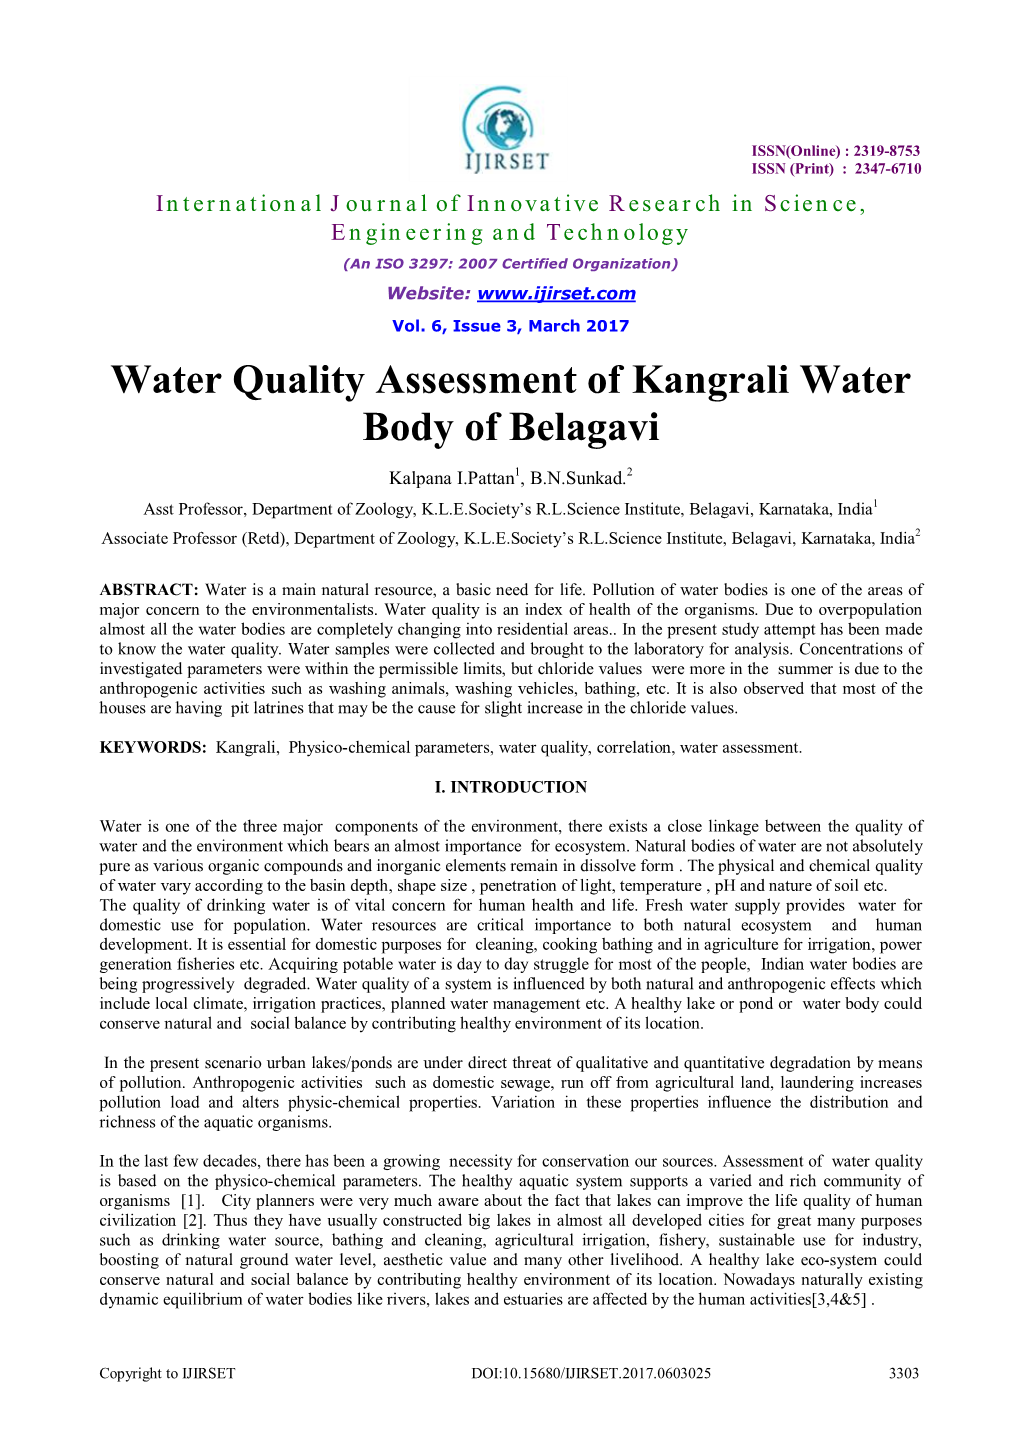 Water Quality Assessment of Kangrali Water Body of Belagavi